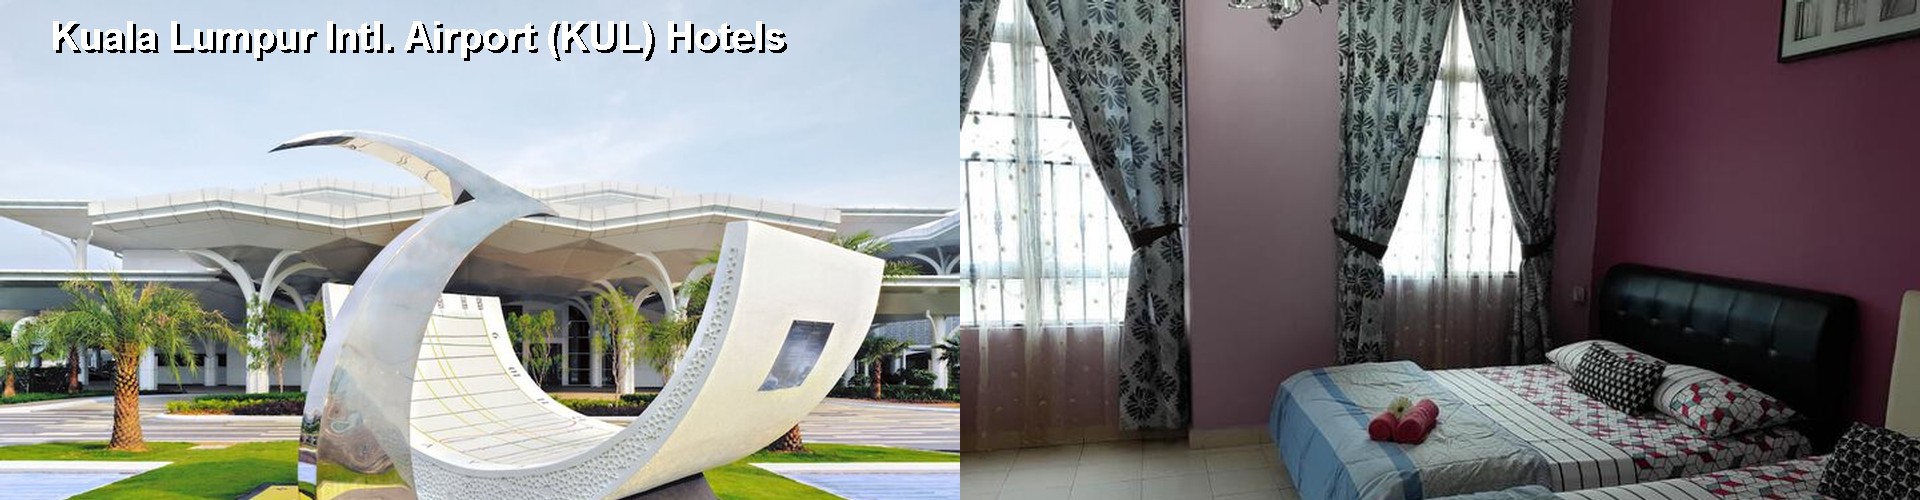 2 Best Hotels near Kuala Lumpur Intl. Airport (KUL)